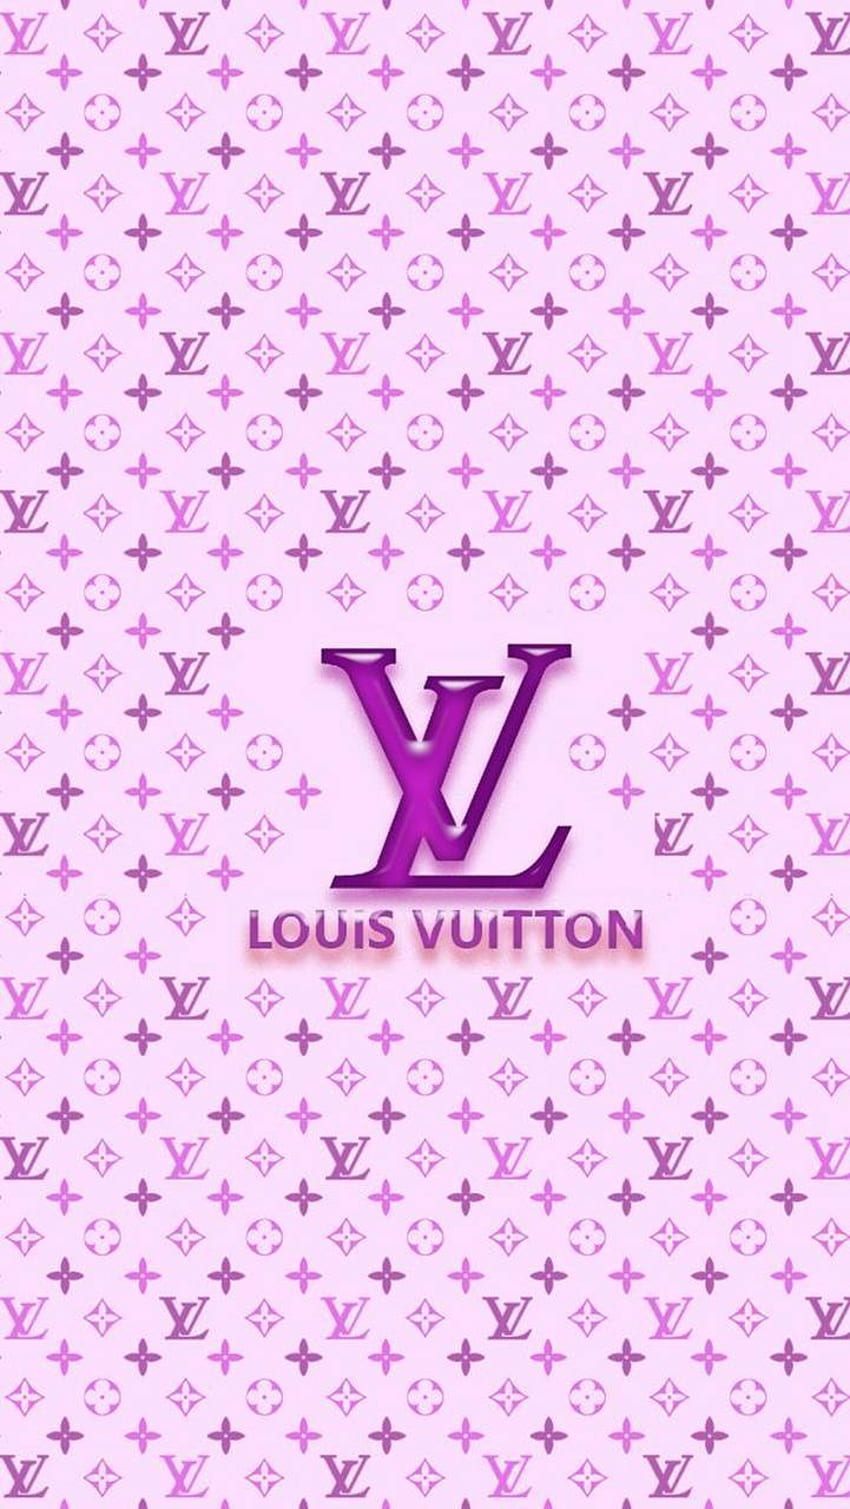 Louis Vuitton Logo  Iphone wallpaper girly, Purple wall art, Iphone  wallpaper themes